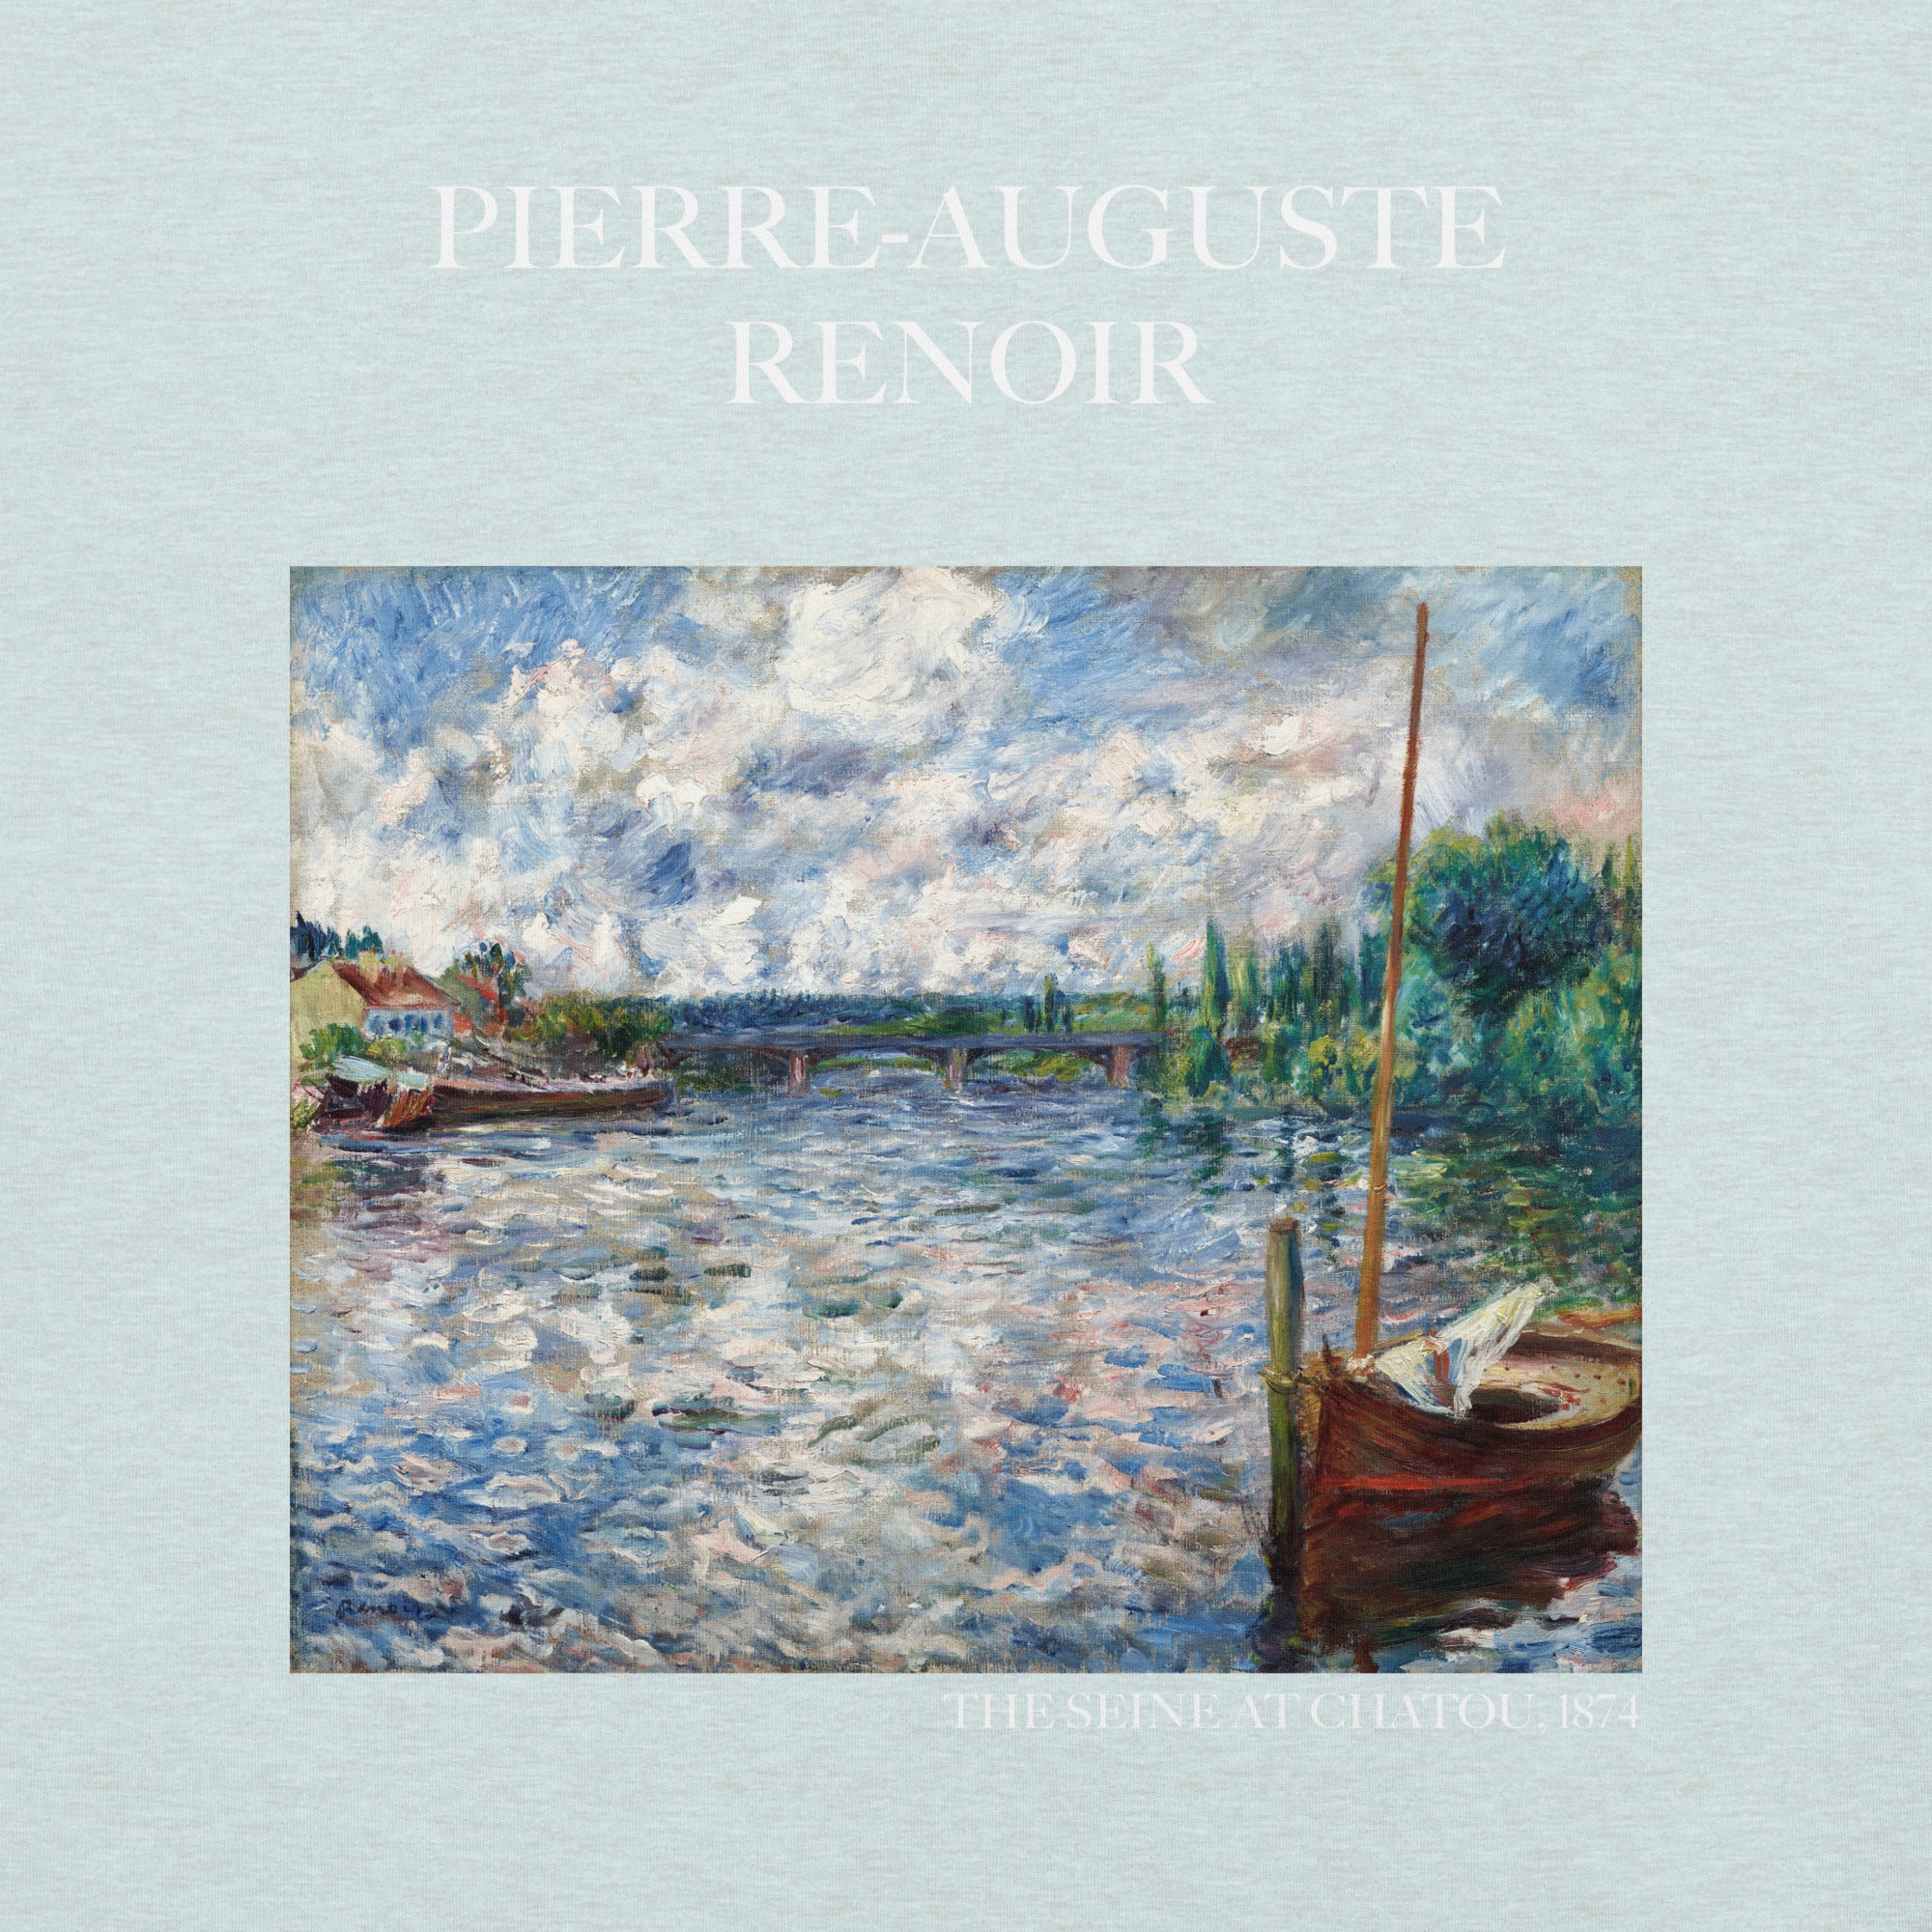 Pierre-Auguste Renoir 'The Seine at Chatou' Famous Painting T-Shirt | Unisex Classic Art Tee